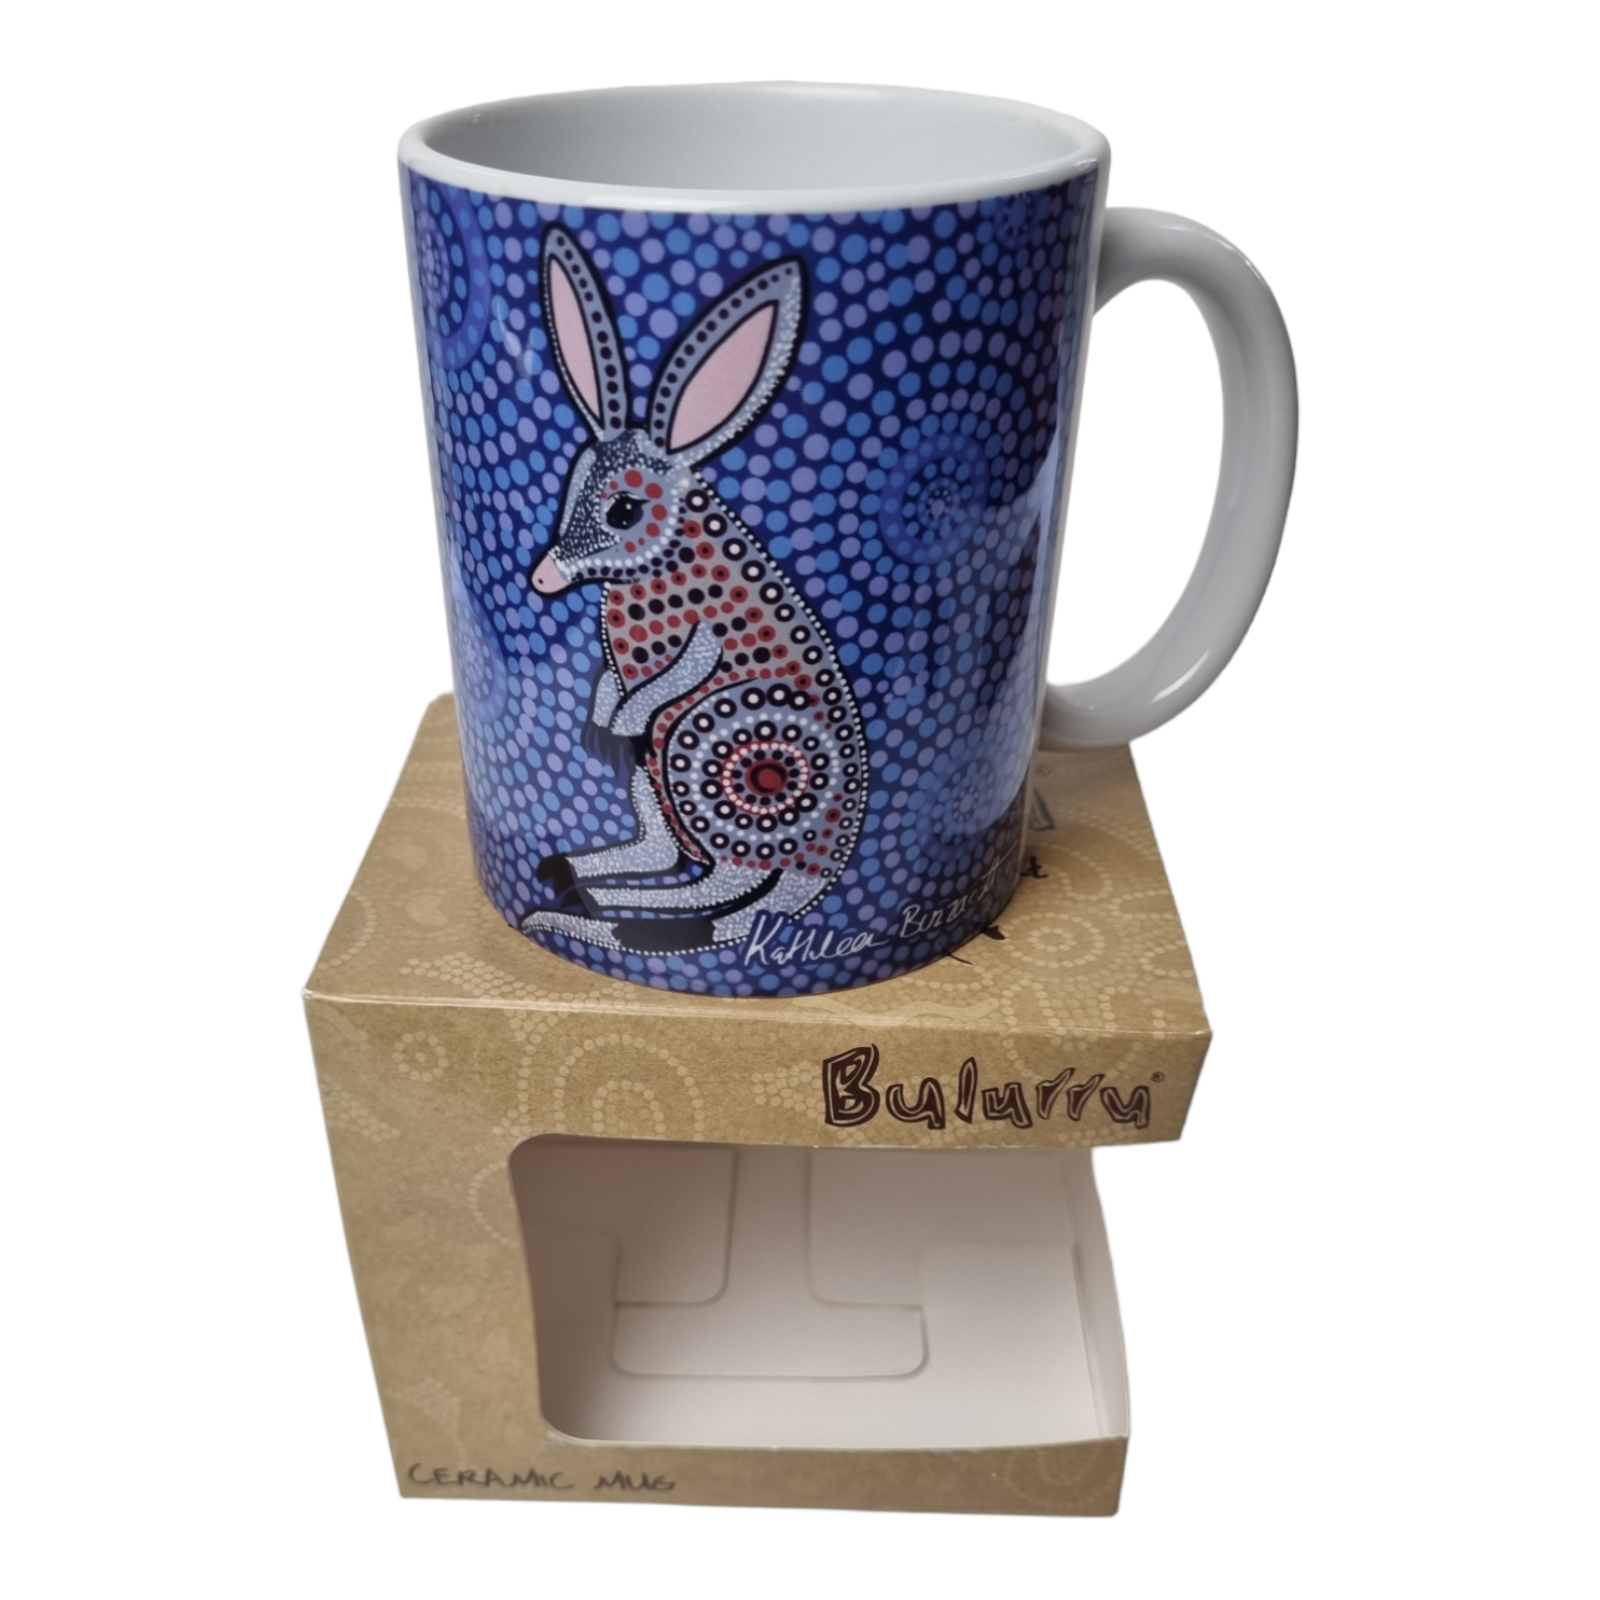 Aboriginal indigenous Artist Coffee Mug in Gift Box Bulurru Cup Australia Bilby